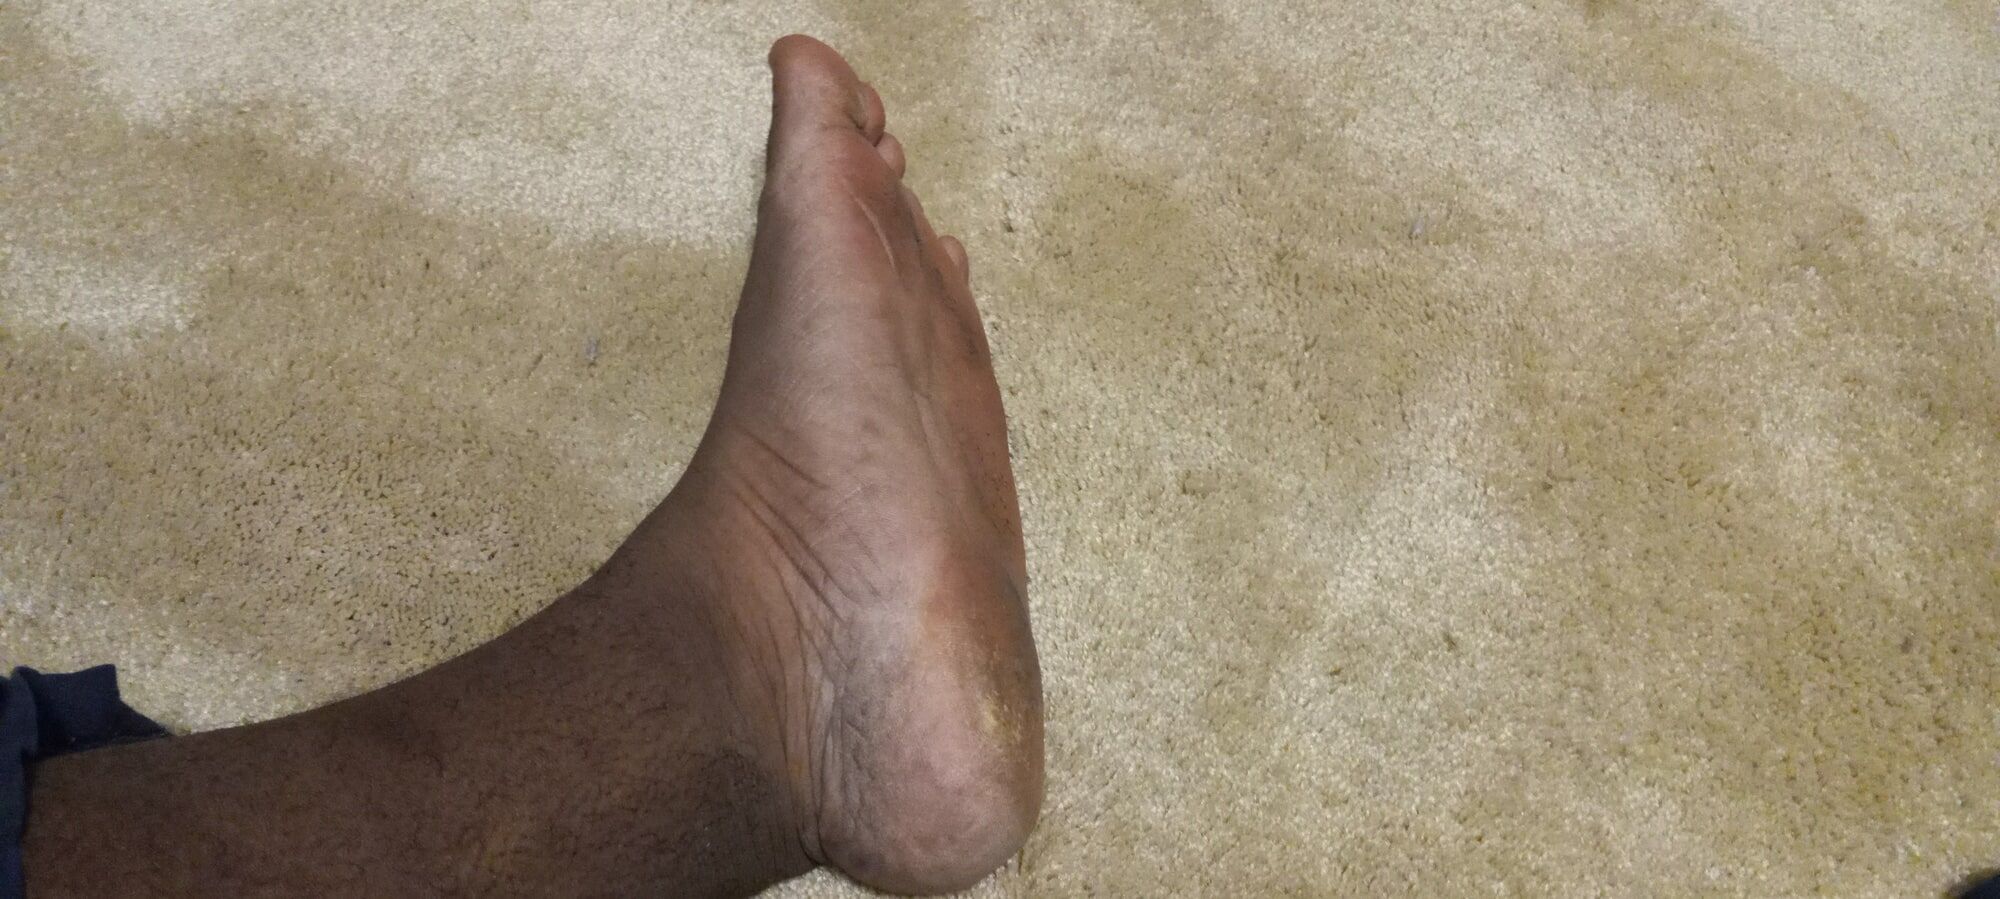 Pics of my Feet #12